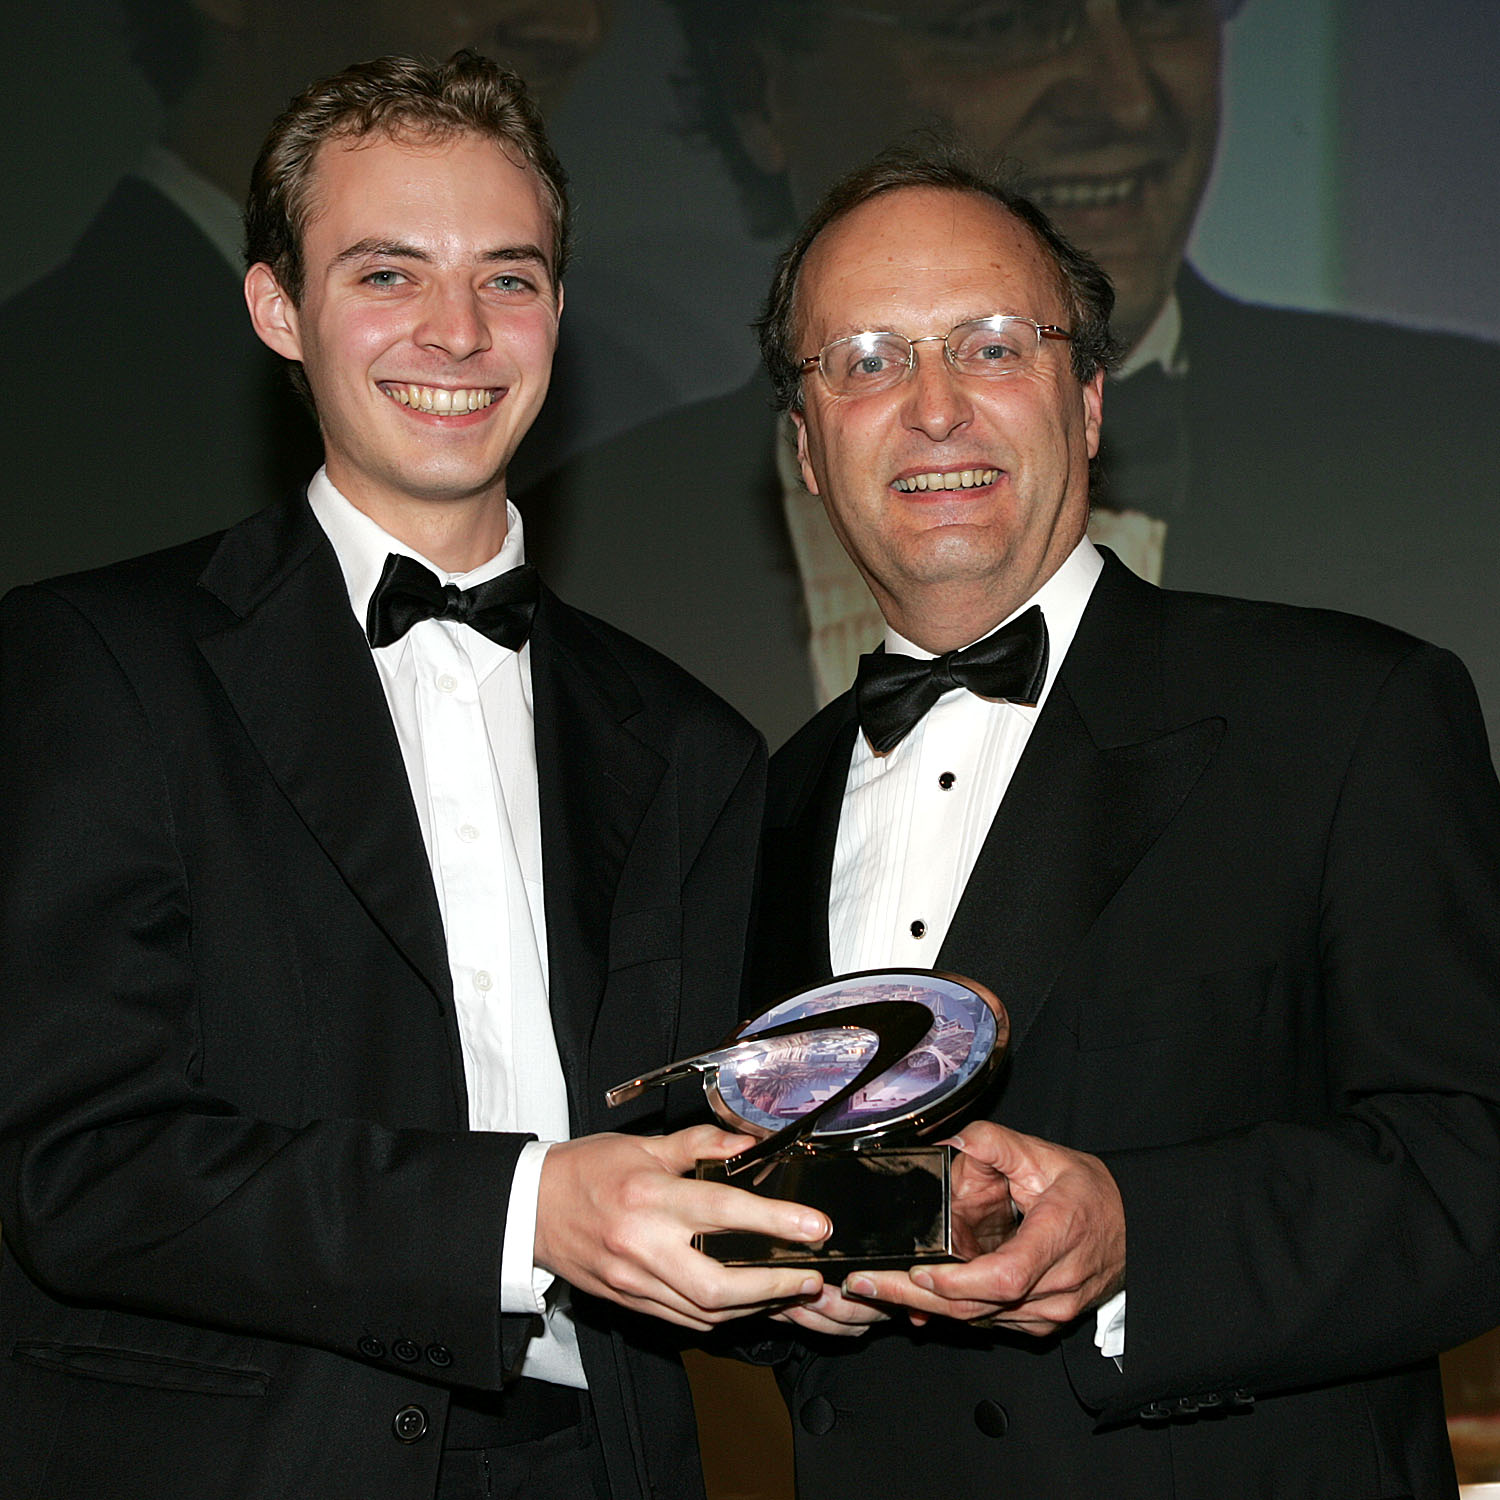 Marc receiving his award